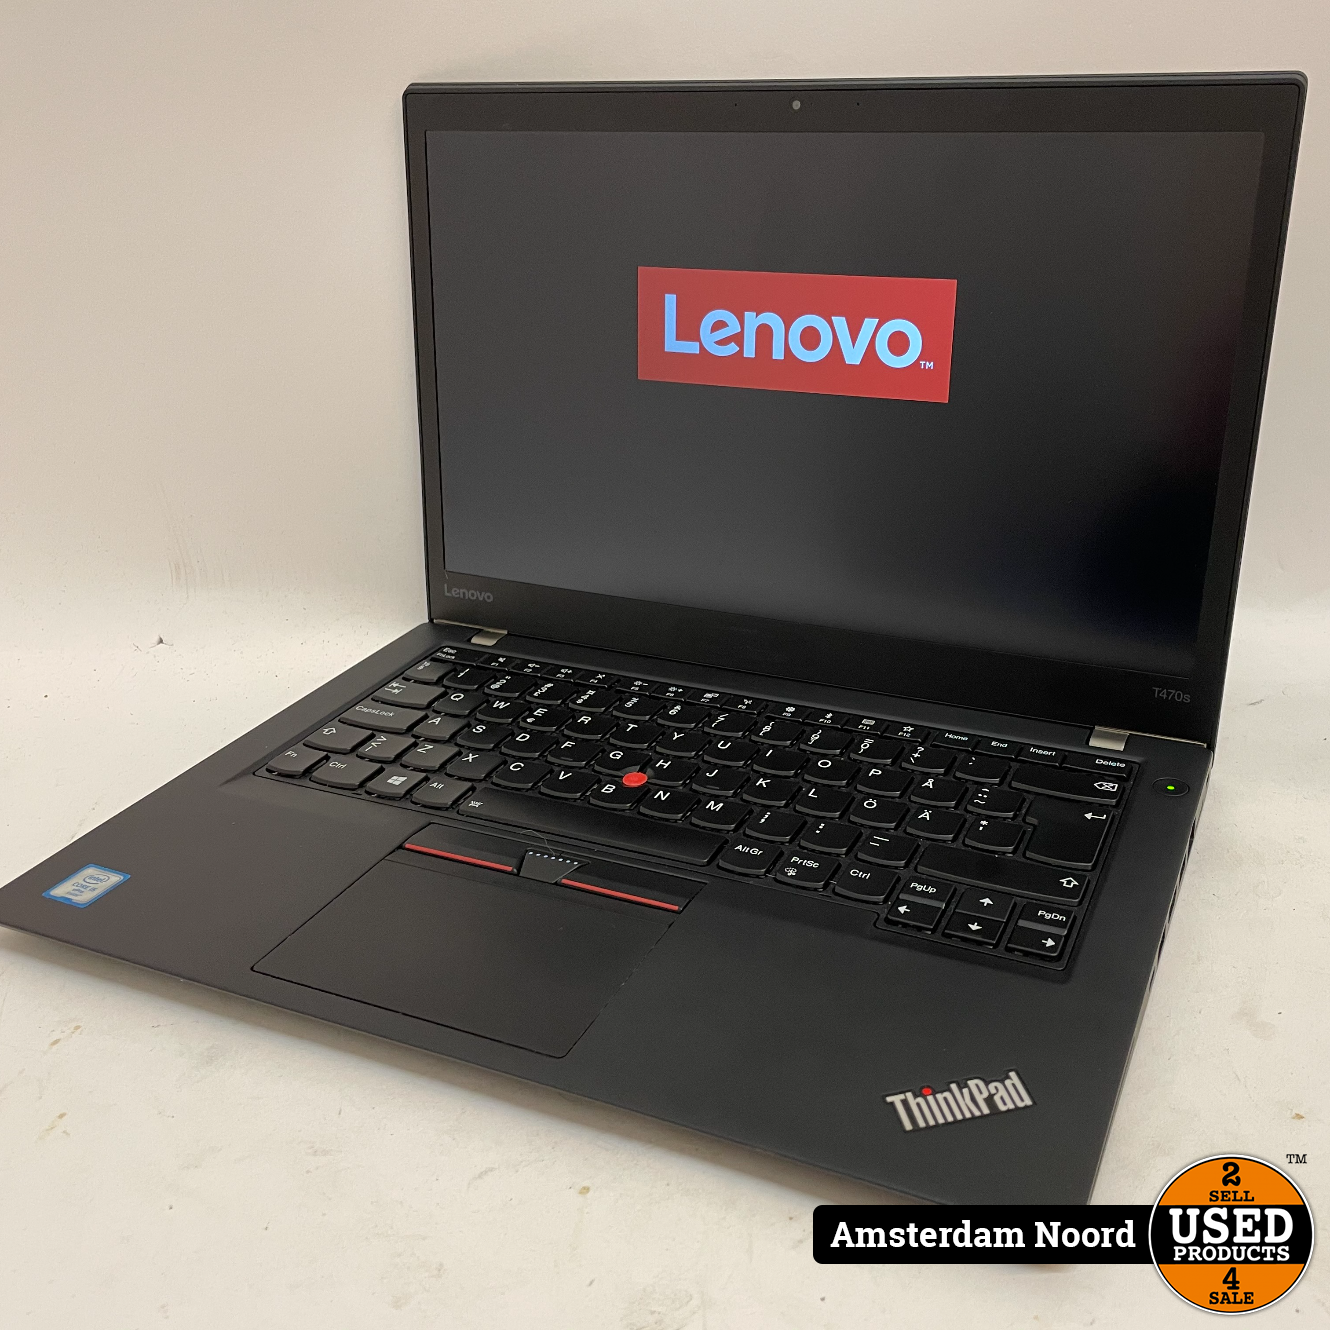 Lenovo Thinkpad T470s - i5-6300U/8GB/256SSD/W10 - Used Products Amsterdam Noord